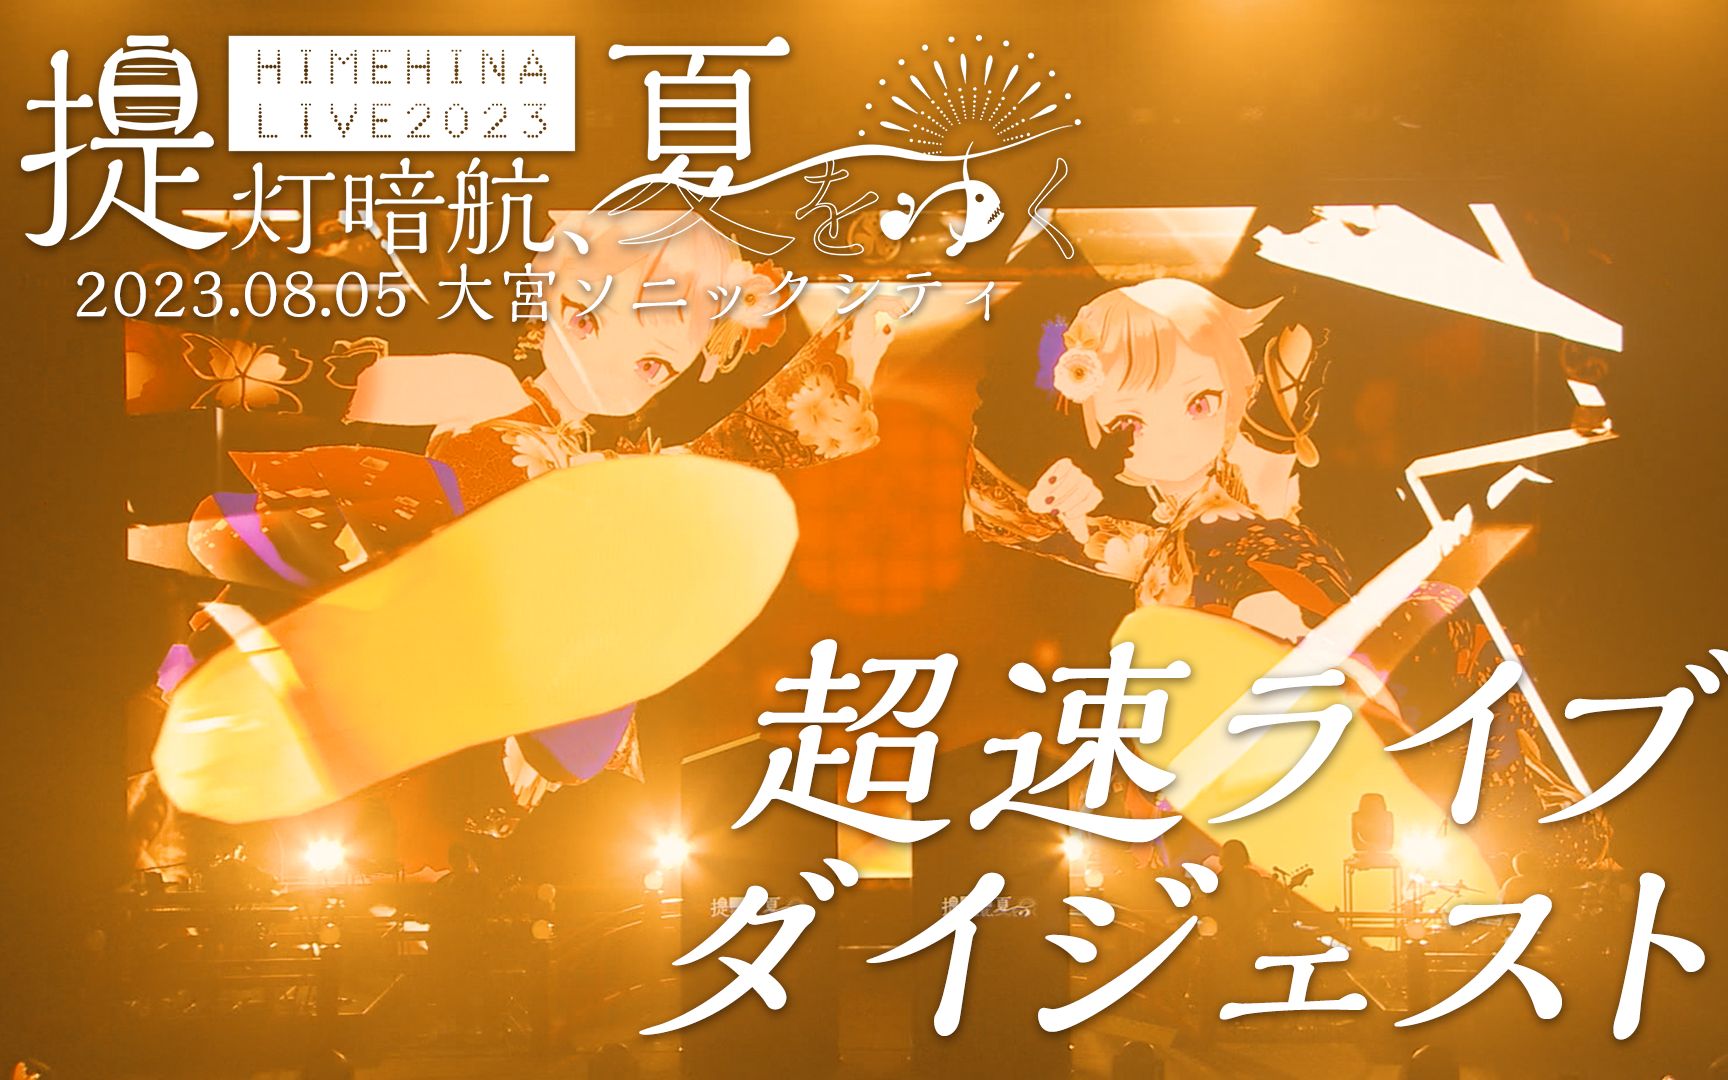 himehina演唱会图片